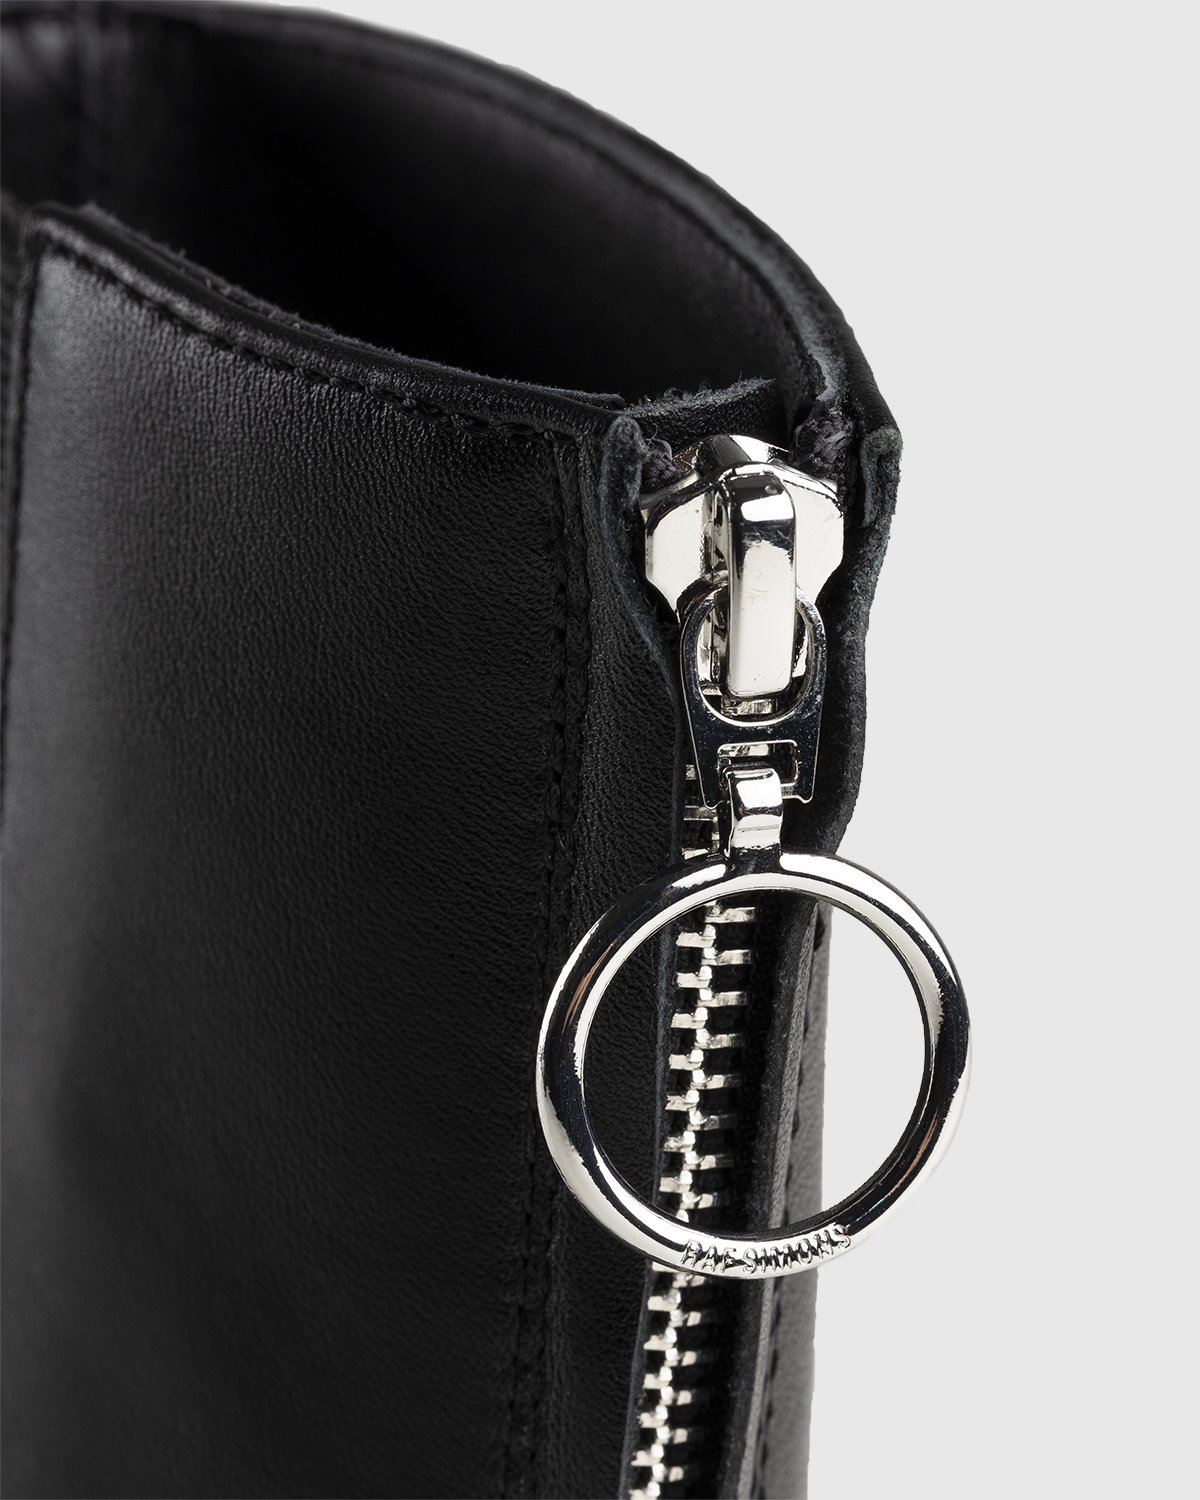 Jil Sander - Chelsea Boots Black - Footwear - Black - Image 6